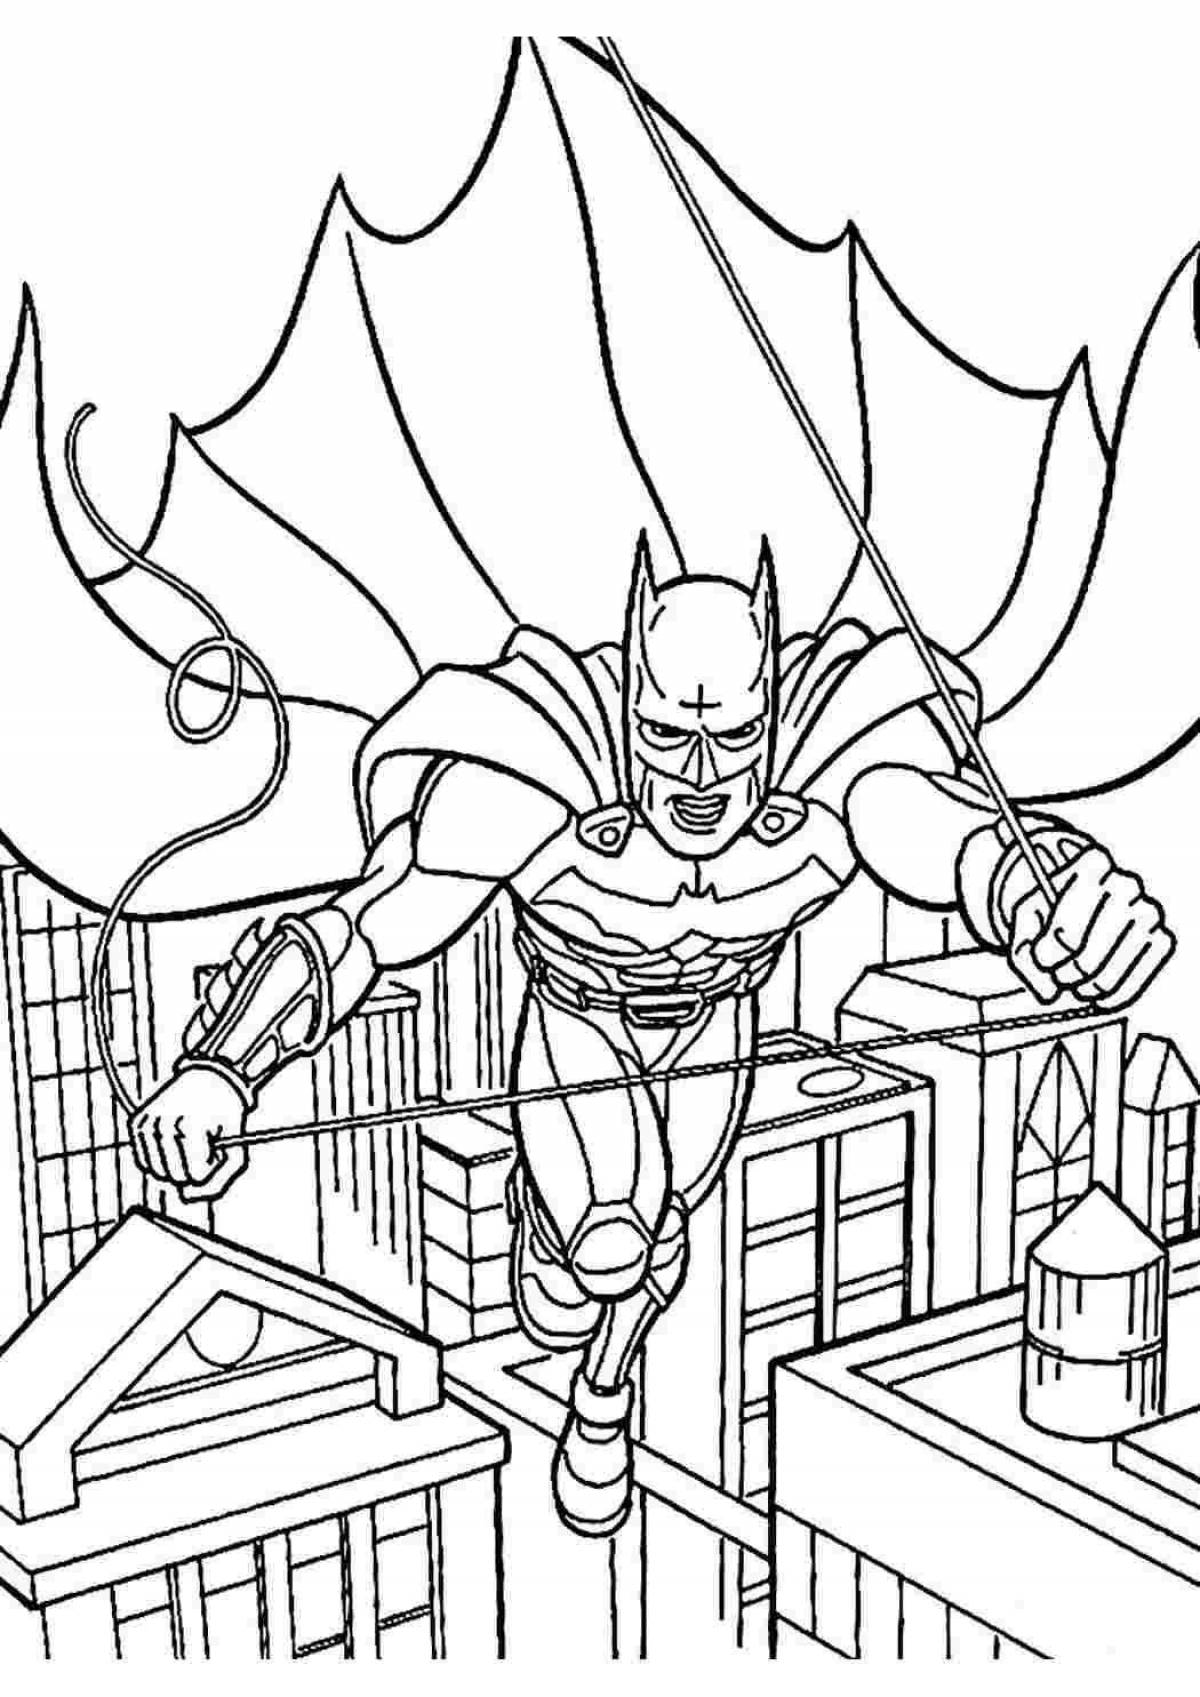 Coloring book batman and spiderman